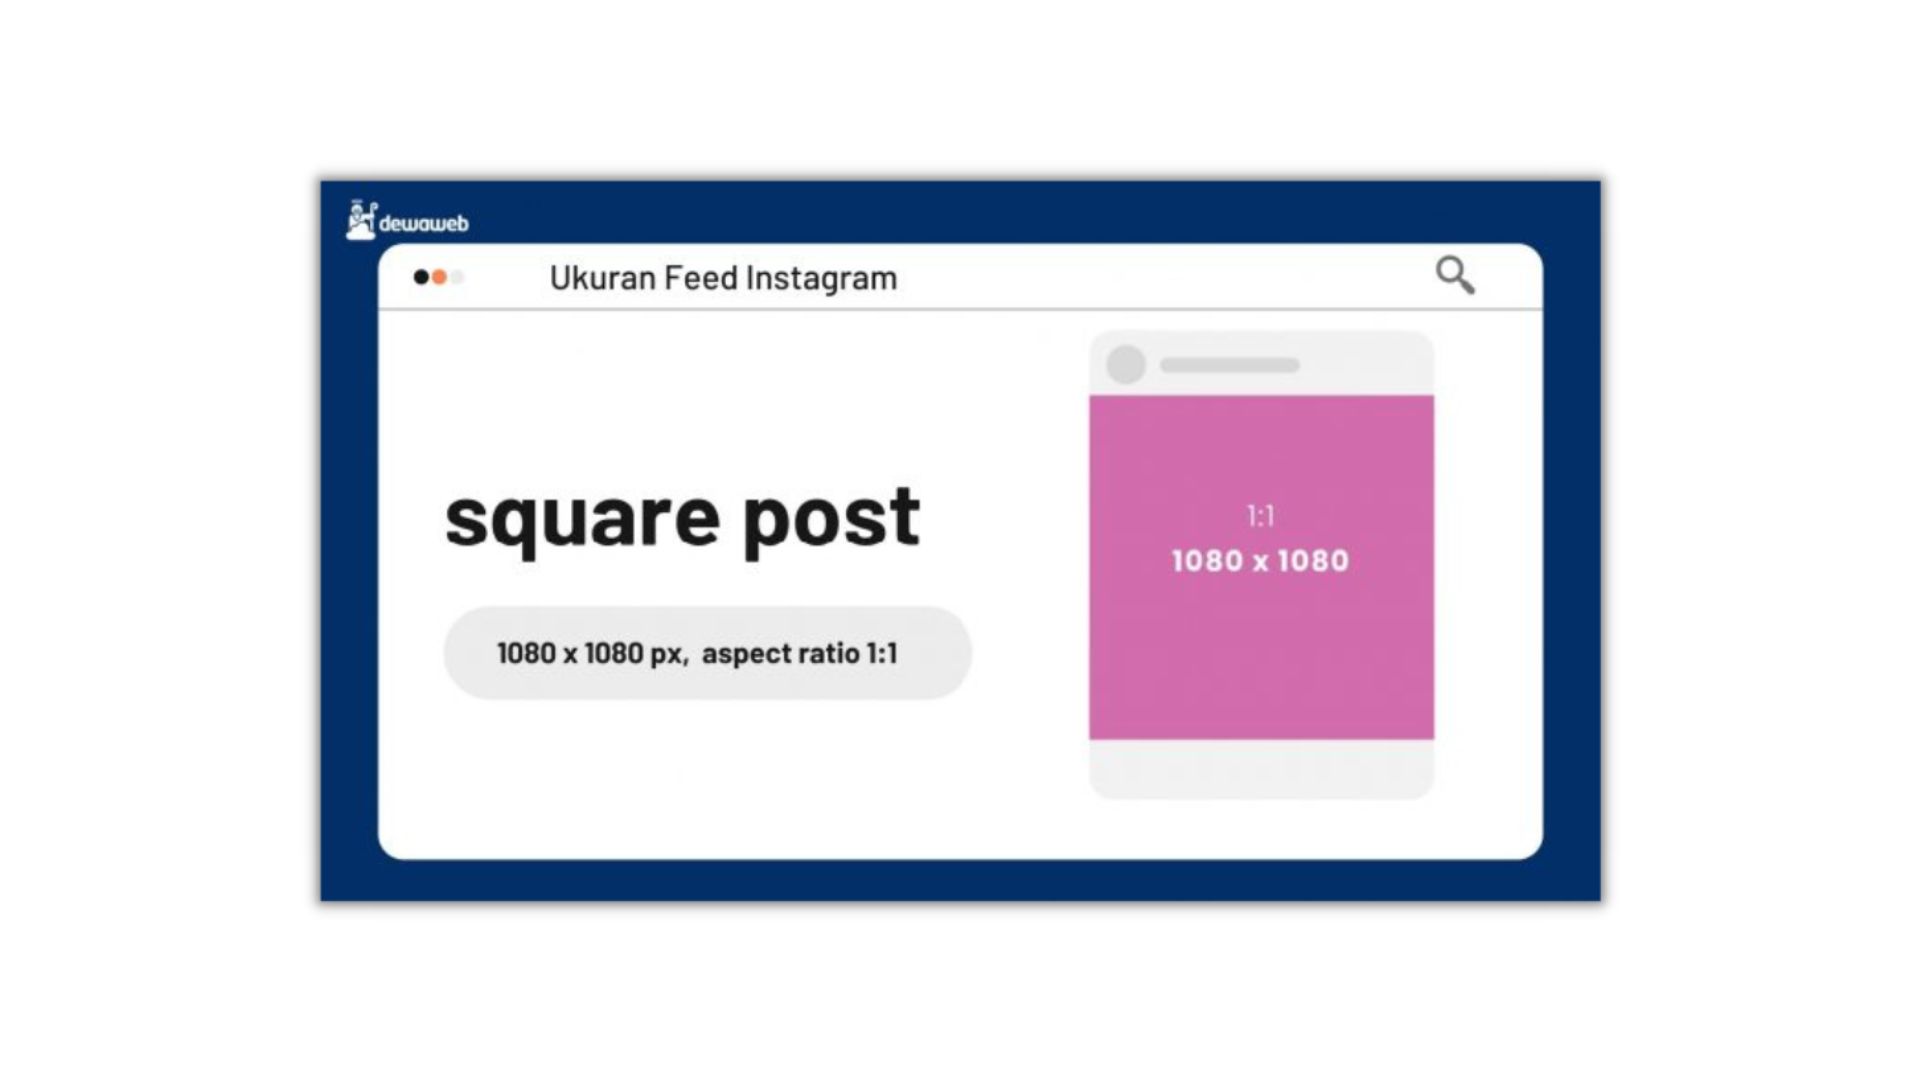 ukuran feed instagram - square post